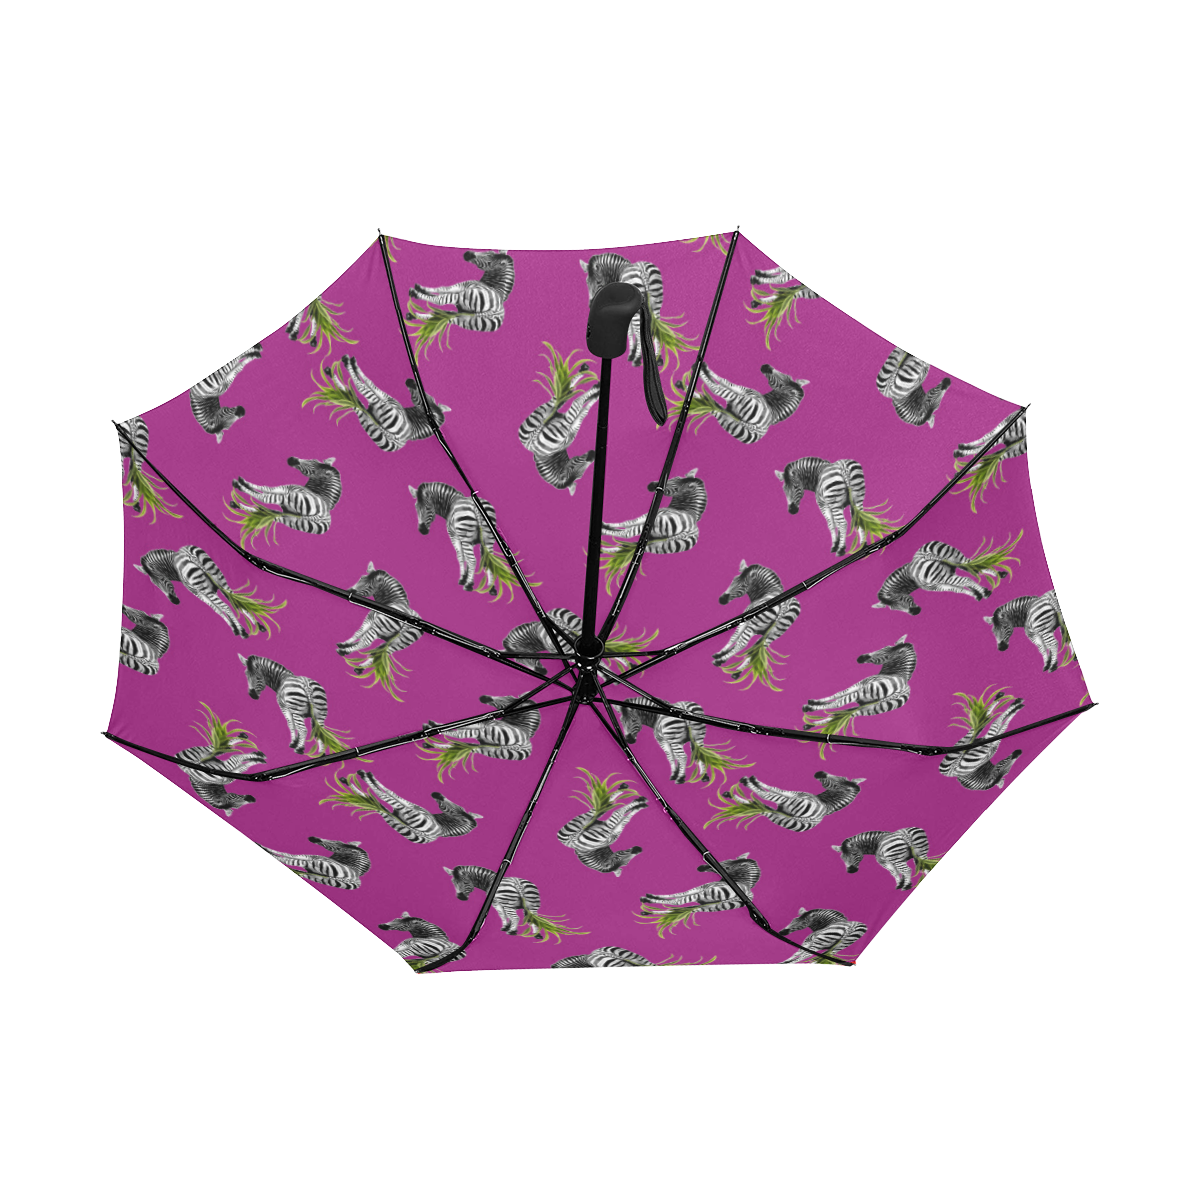 Zebra pattern Anti-UV Auto-Foldable Umbrella (Underside Printing) (U06)